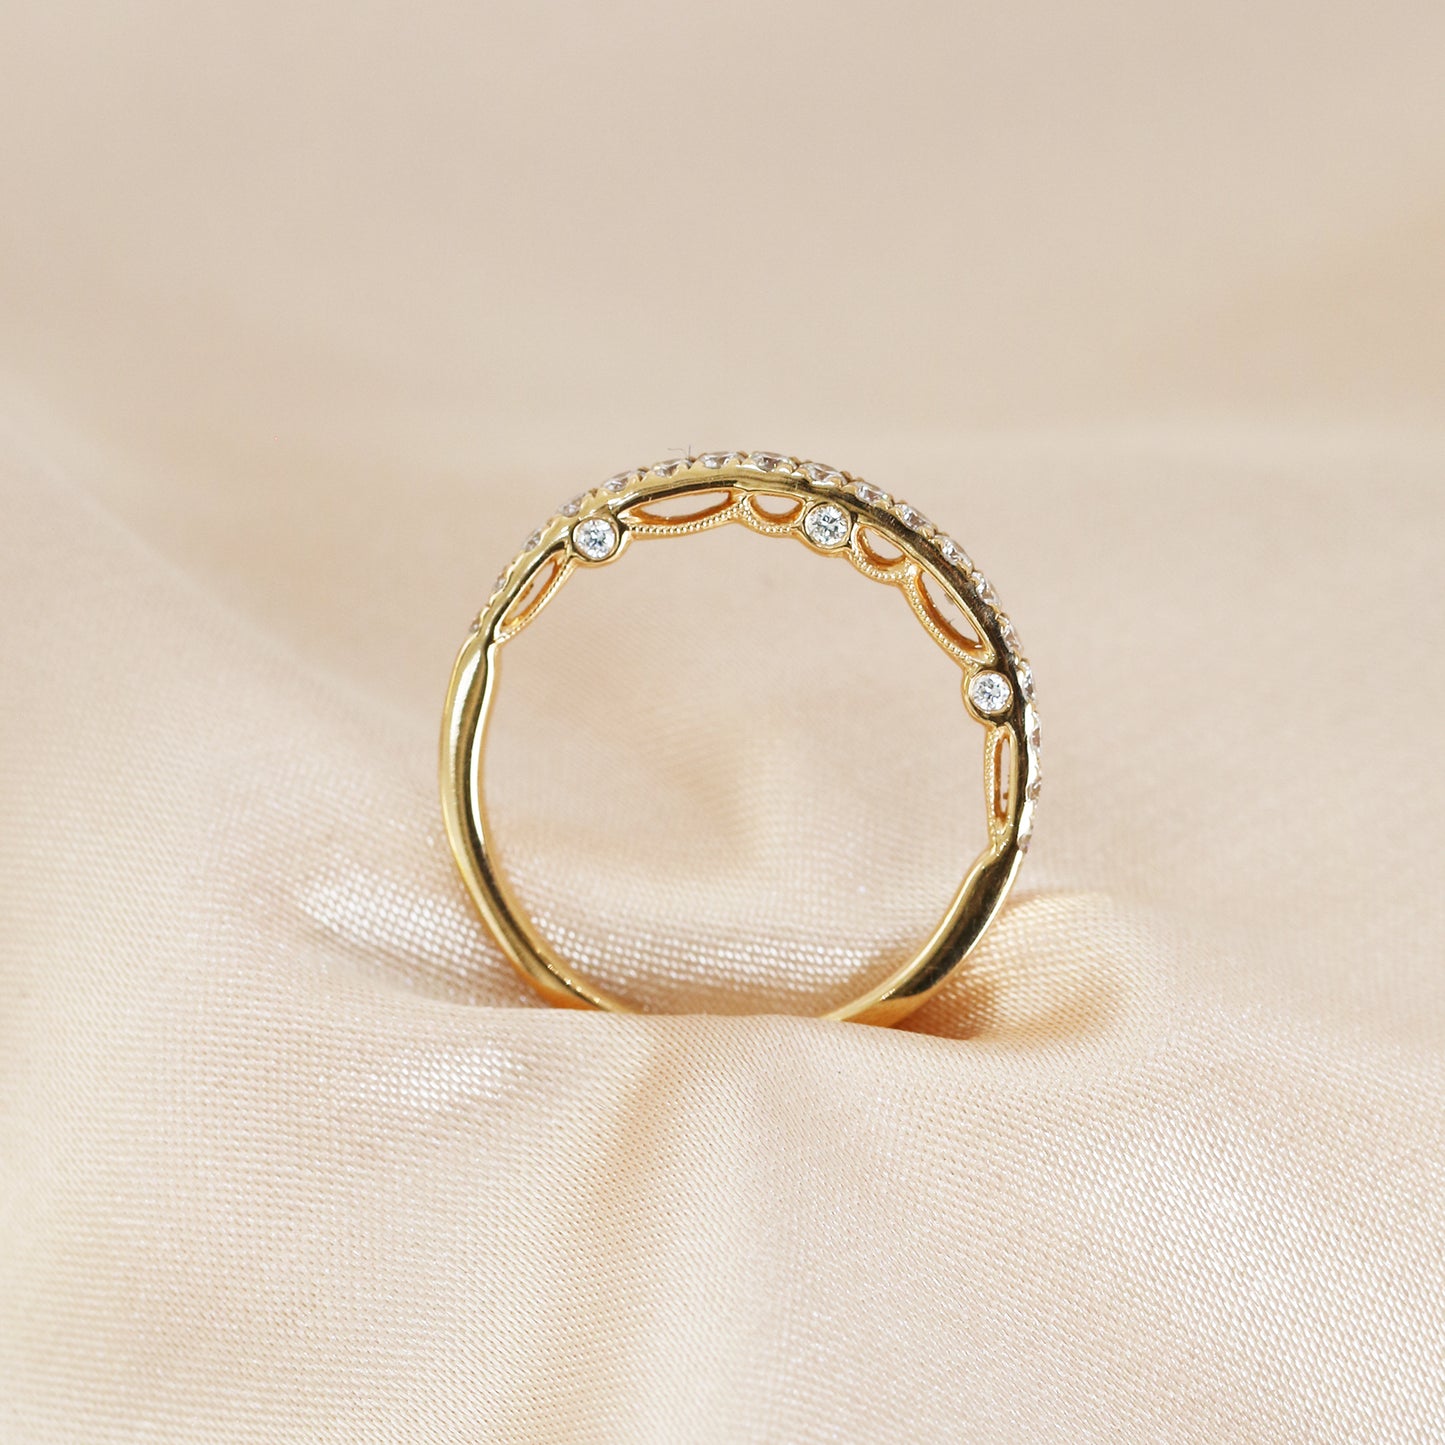 香檳色背景18k玫瑰金三面鑽石蕾絲戒指 18k Rose Gold 3-Sided Lace Eternity Diamond Ring in champagne gold background 